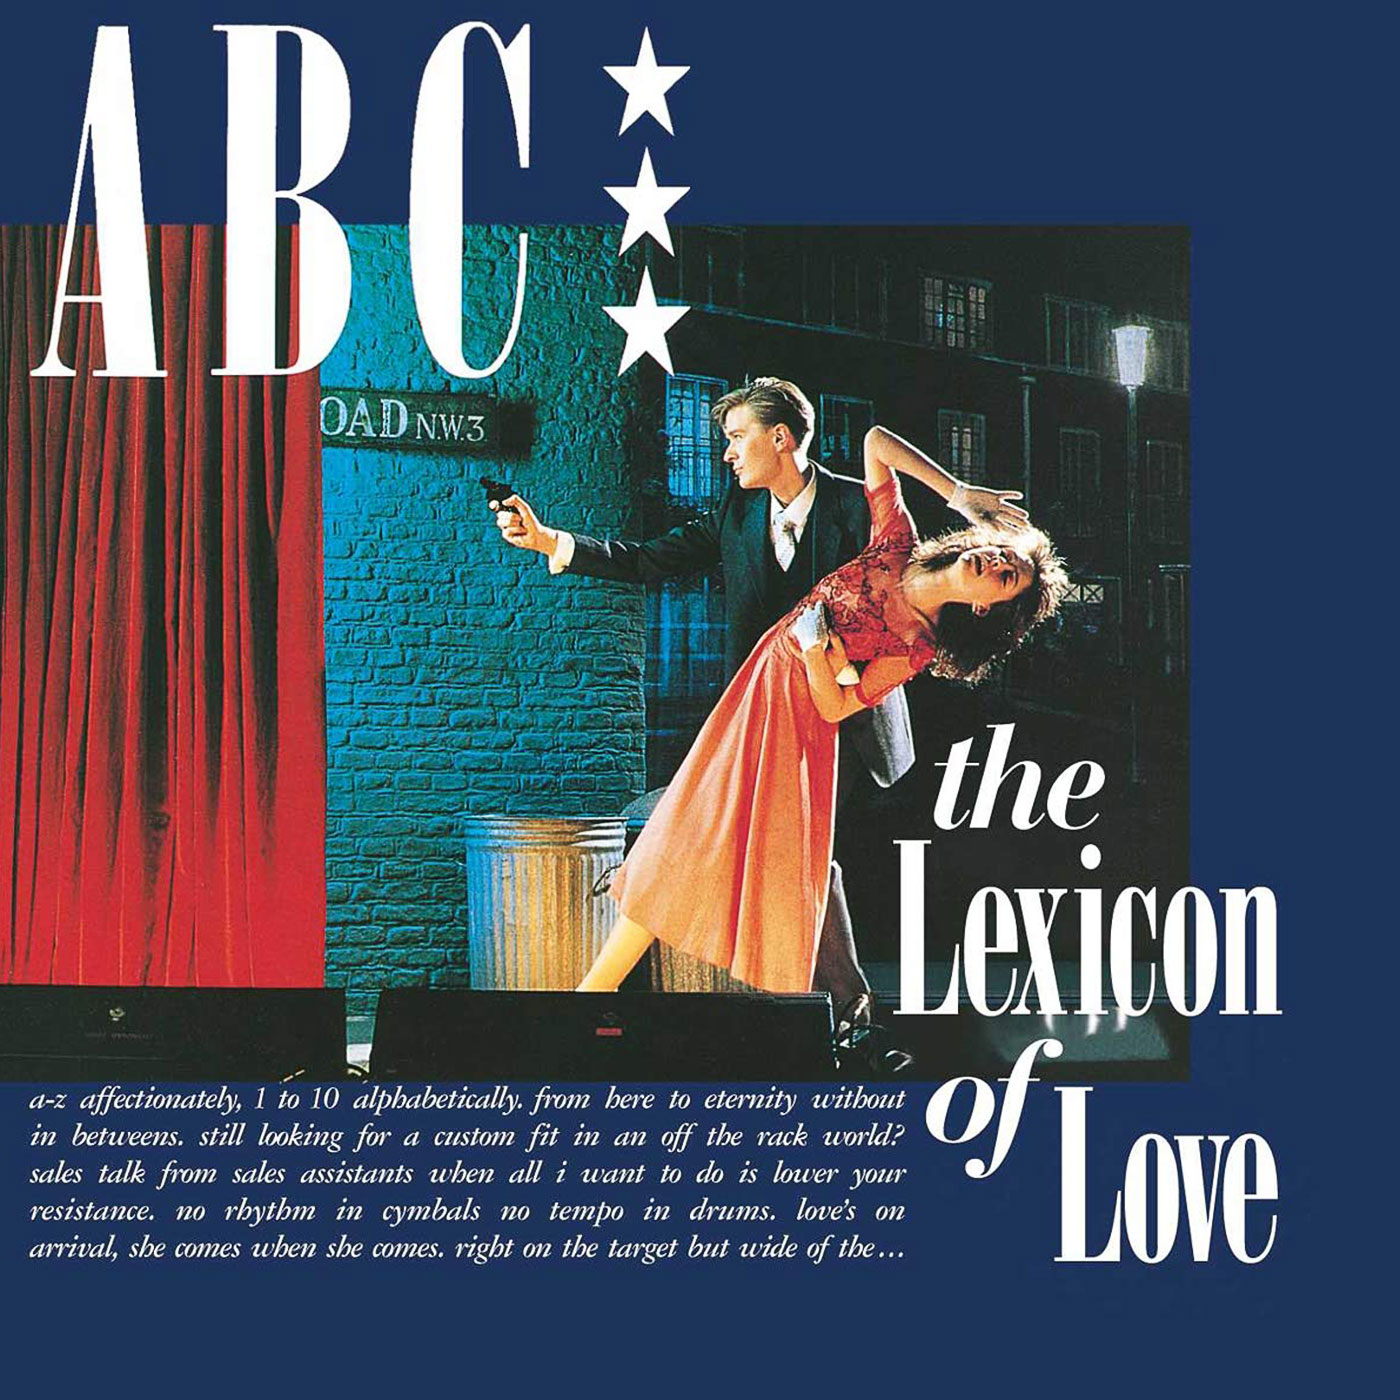 496 ABC – The Lexicon of Love